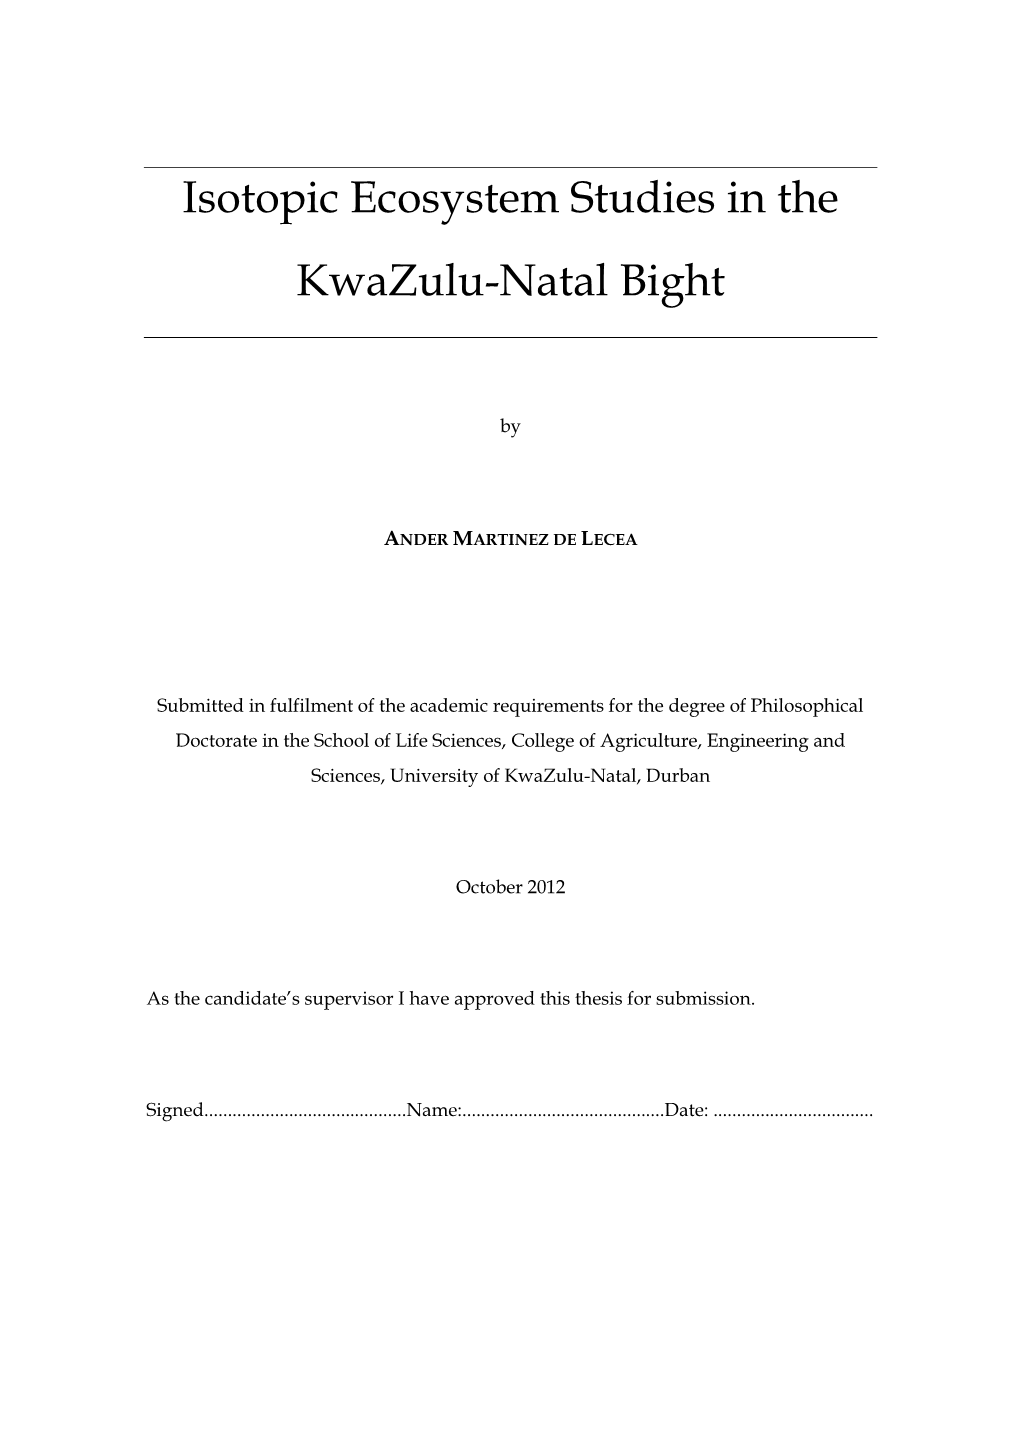 Isotopic Ecosystem Studies in the Kwazulu-Natal Bight